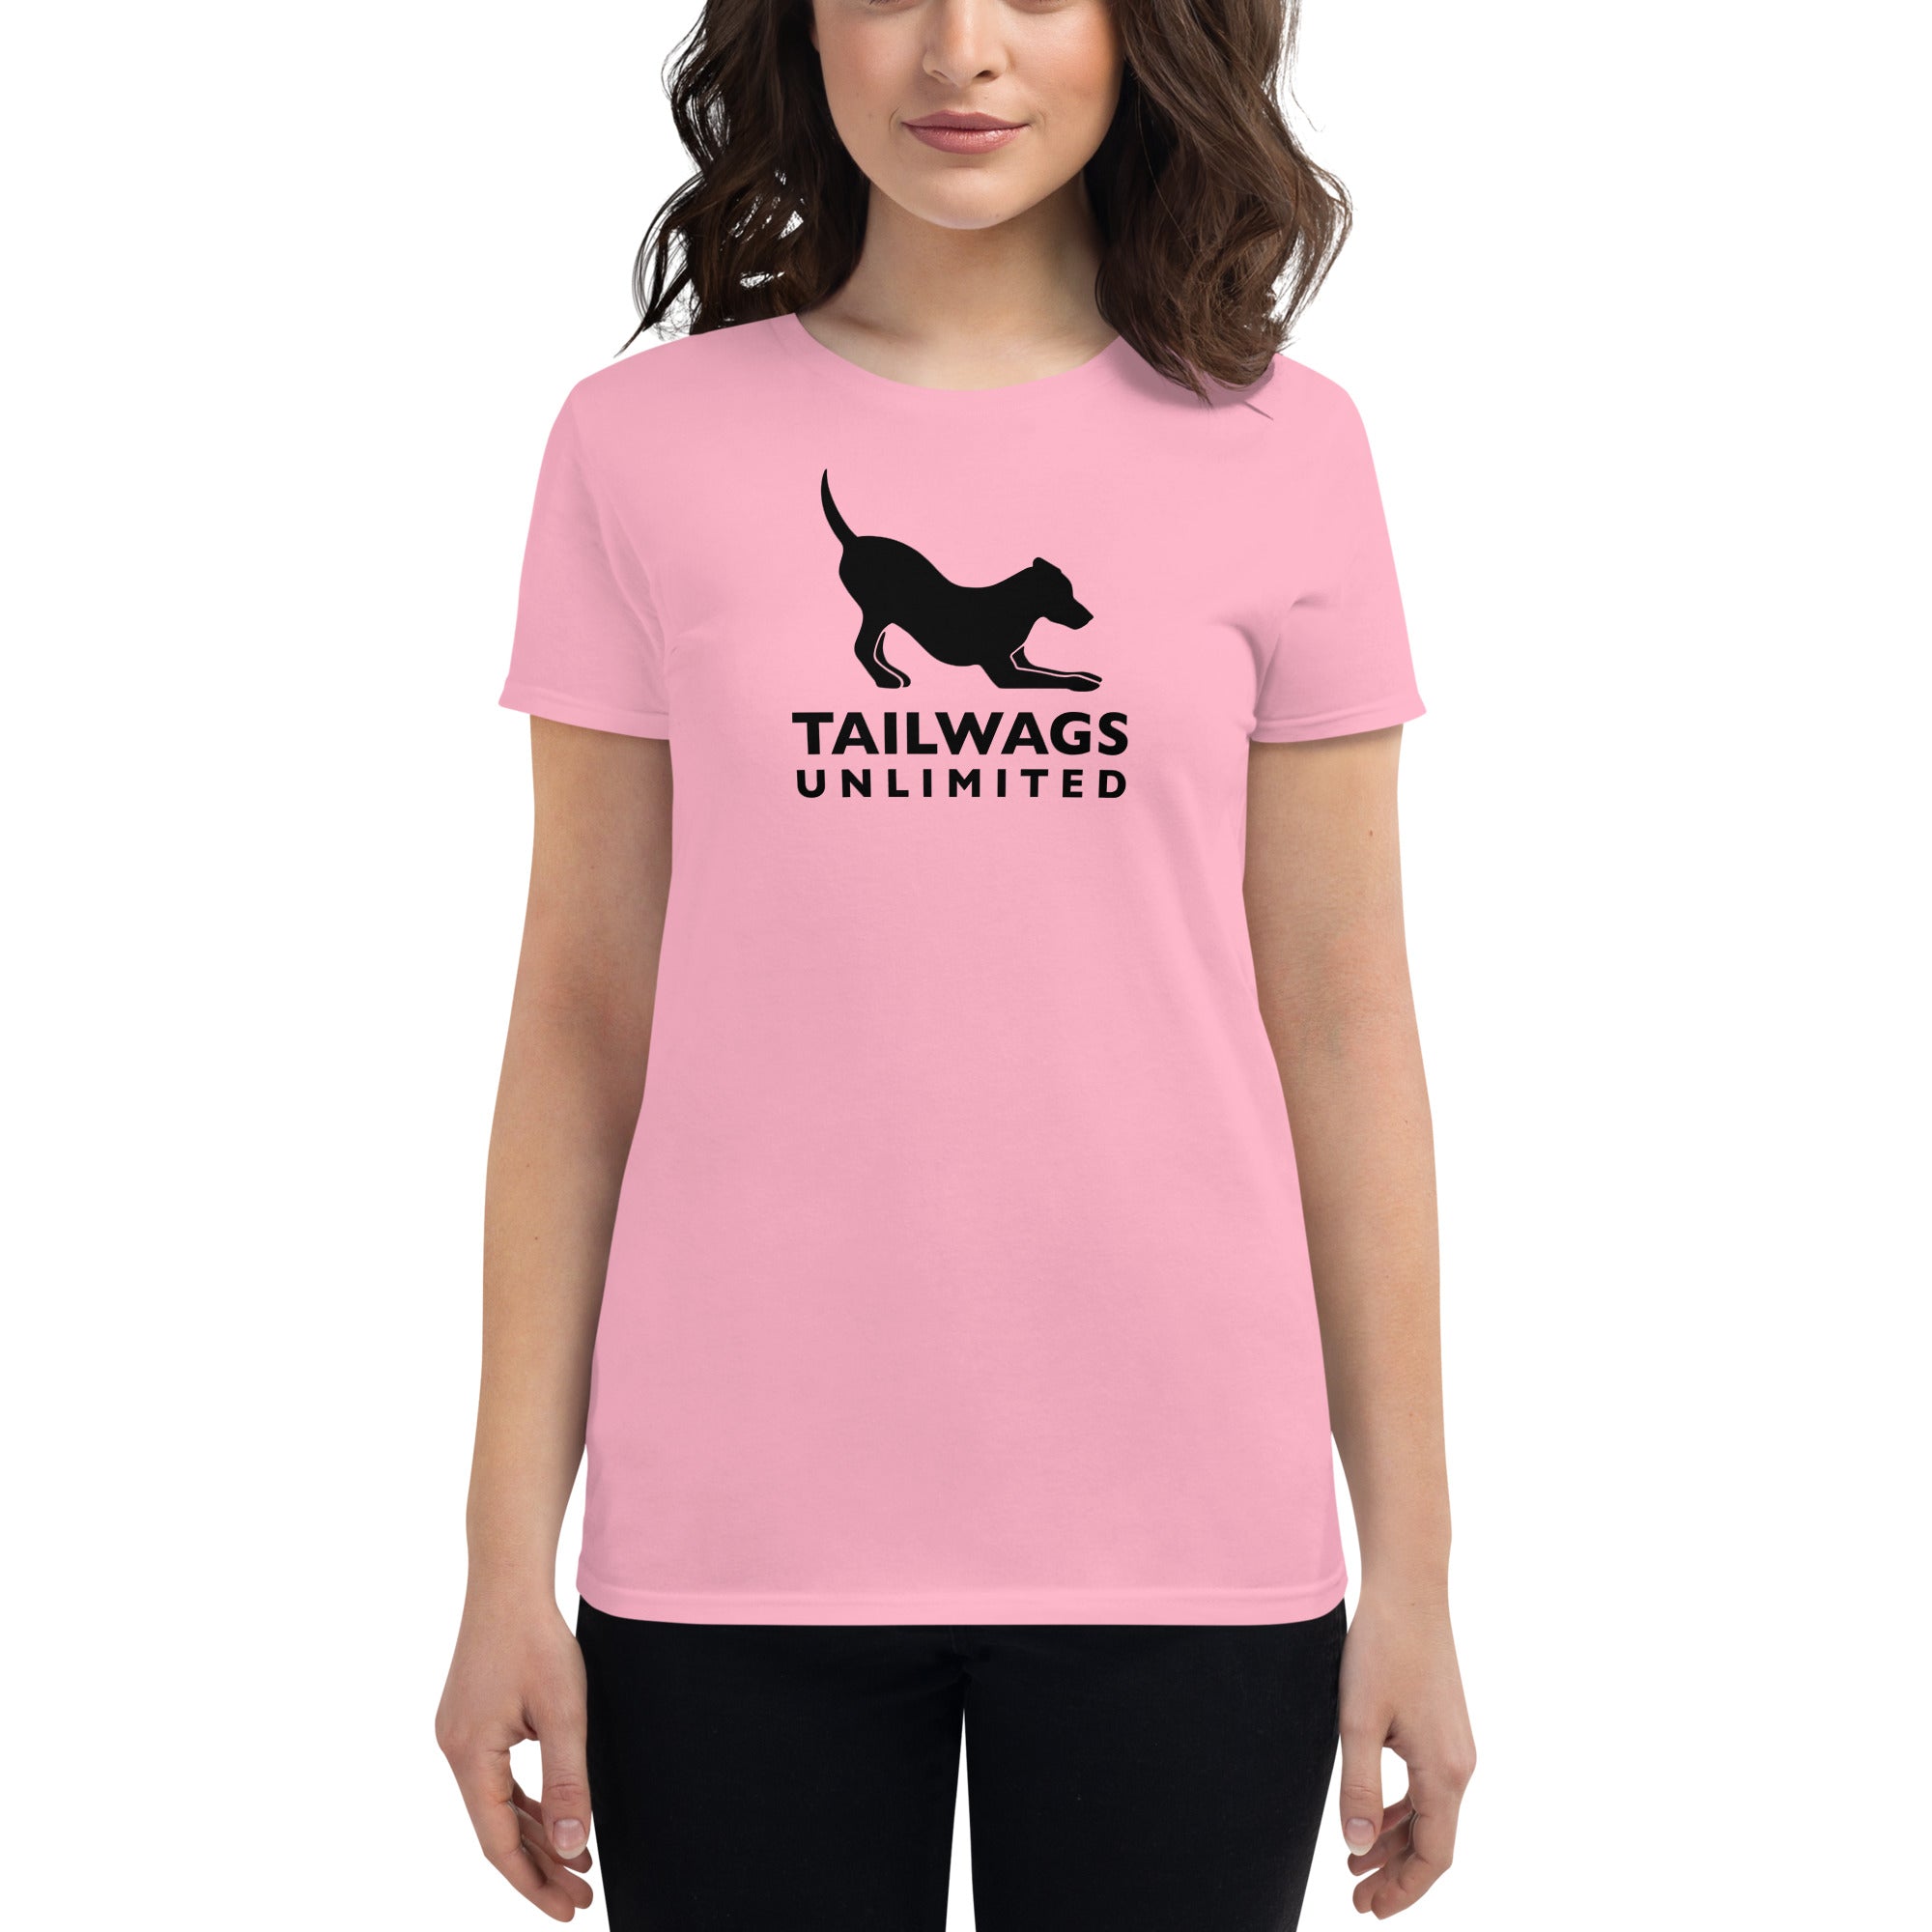 Black Logo Women's Fit T-Shirt - TAILWAGS UNLIMITED